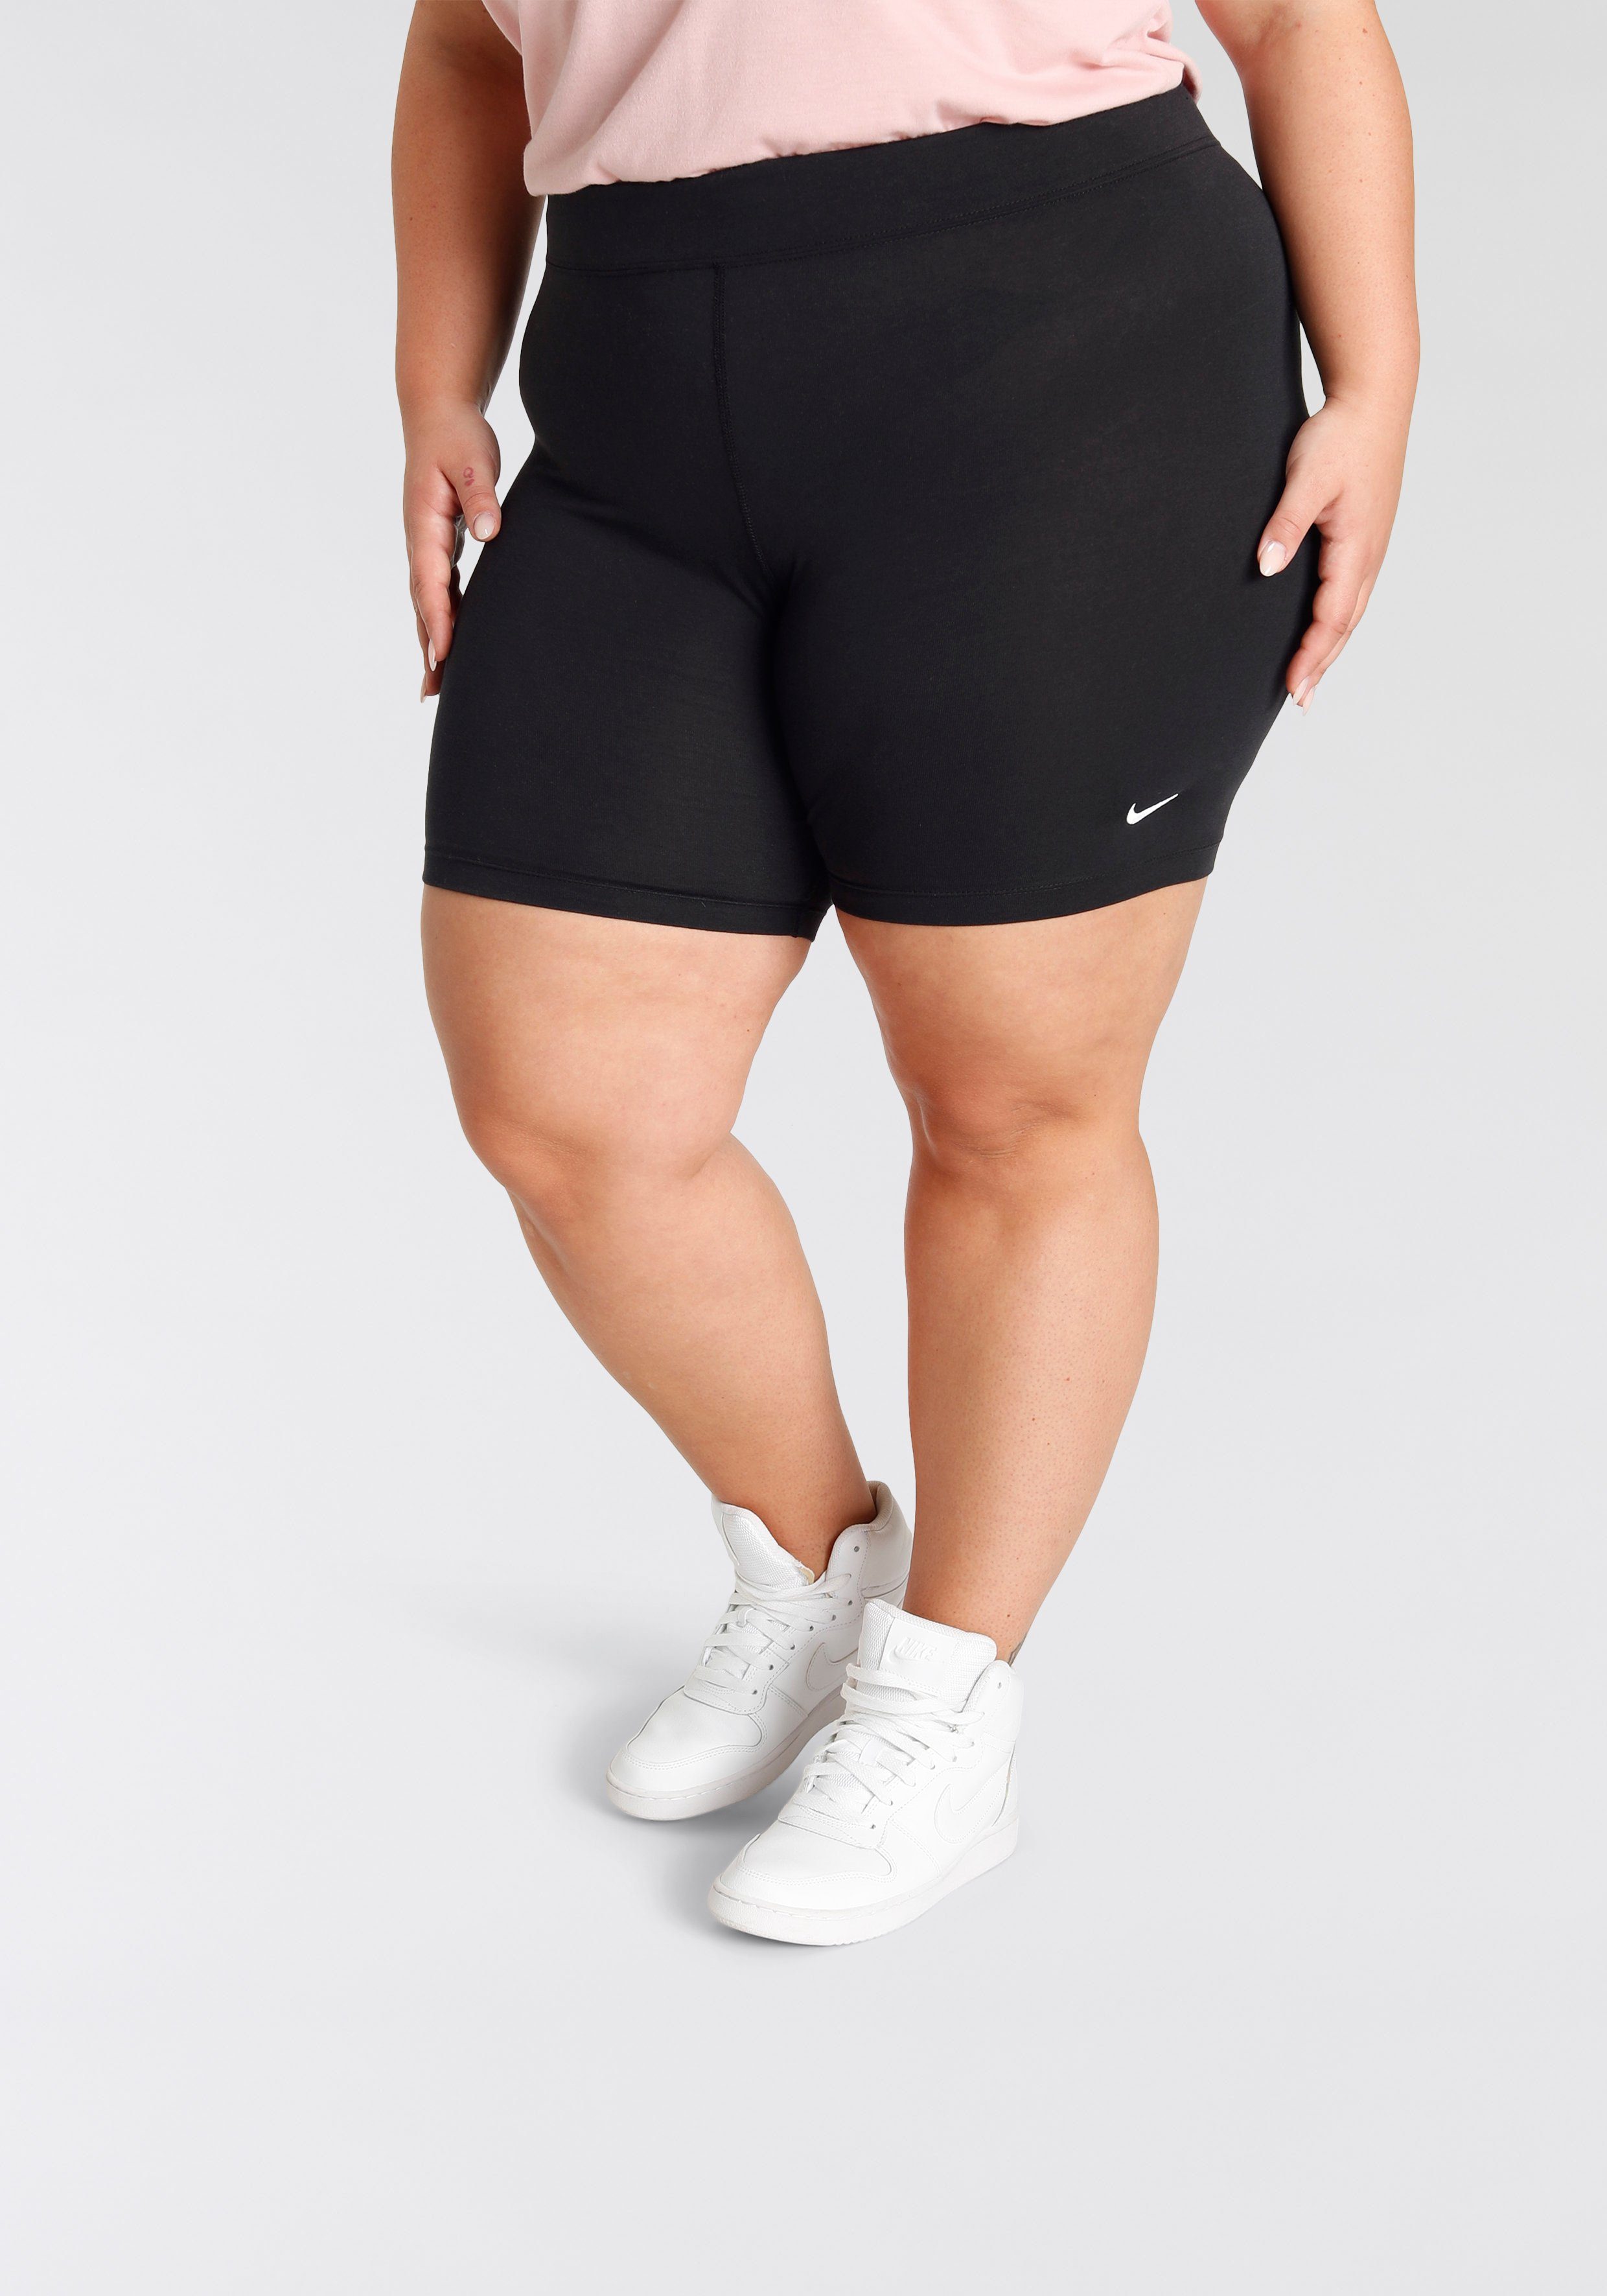 Nike Sportswear Radlerhose »Nsw Estl Bk Shrt Lbr Mr Plus Women's Mid-rise  Bike Shorts Plus Size« online kaufen | OTTO